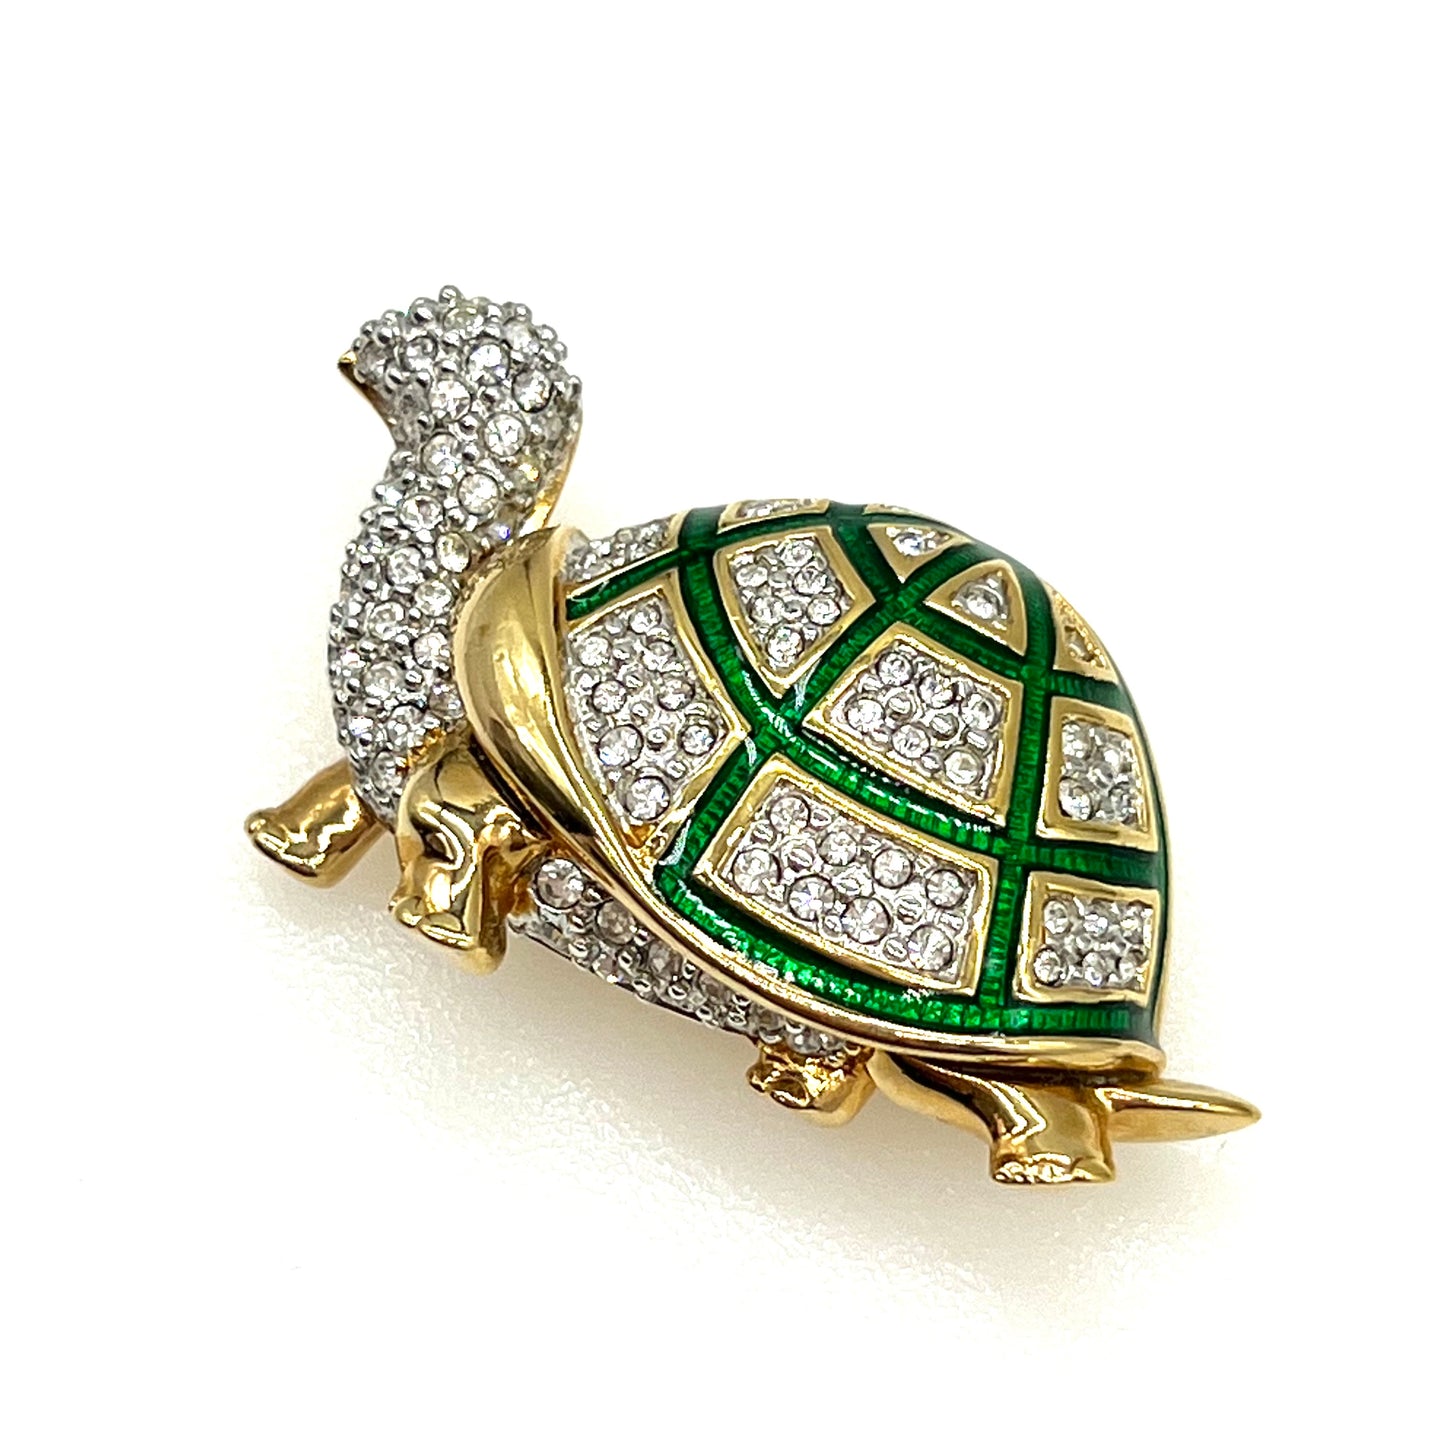 Signed Swarovski 18ct Gold Plated Crystal Turtle Brooch